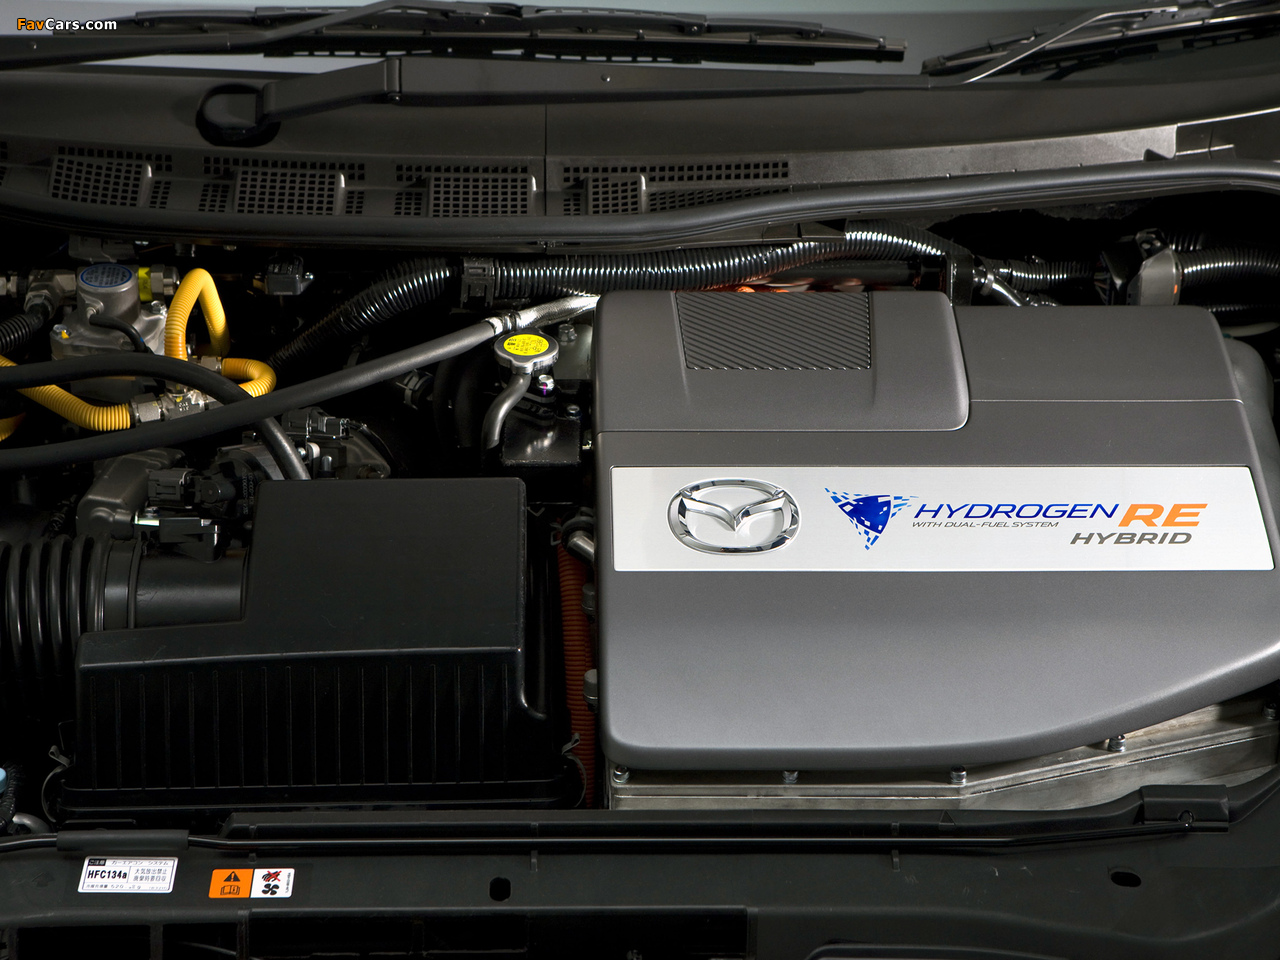 Mazda Premacy Hydrogen RE 2009 photos (1280 x 960)